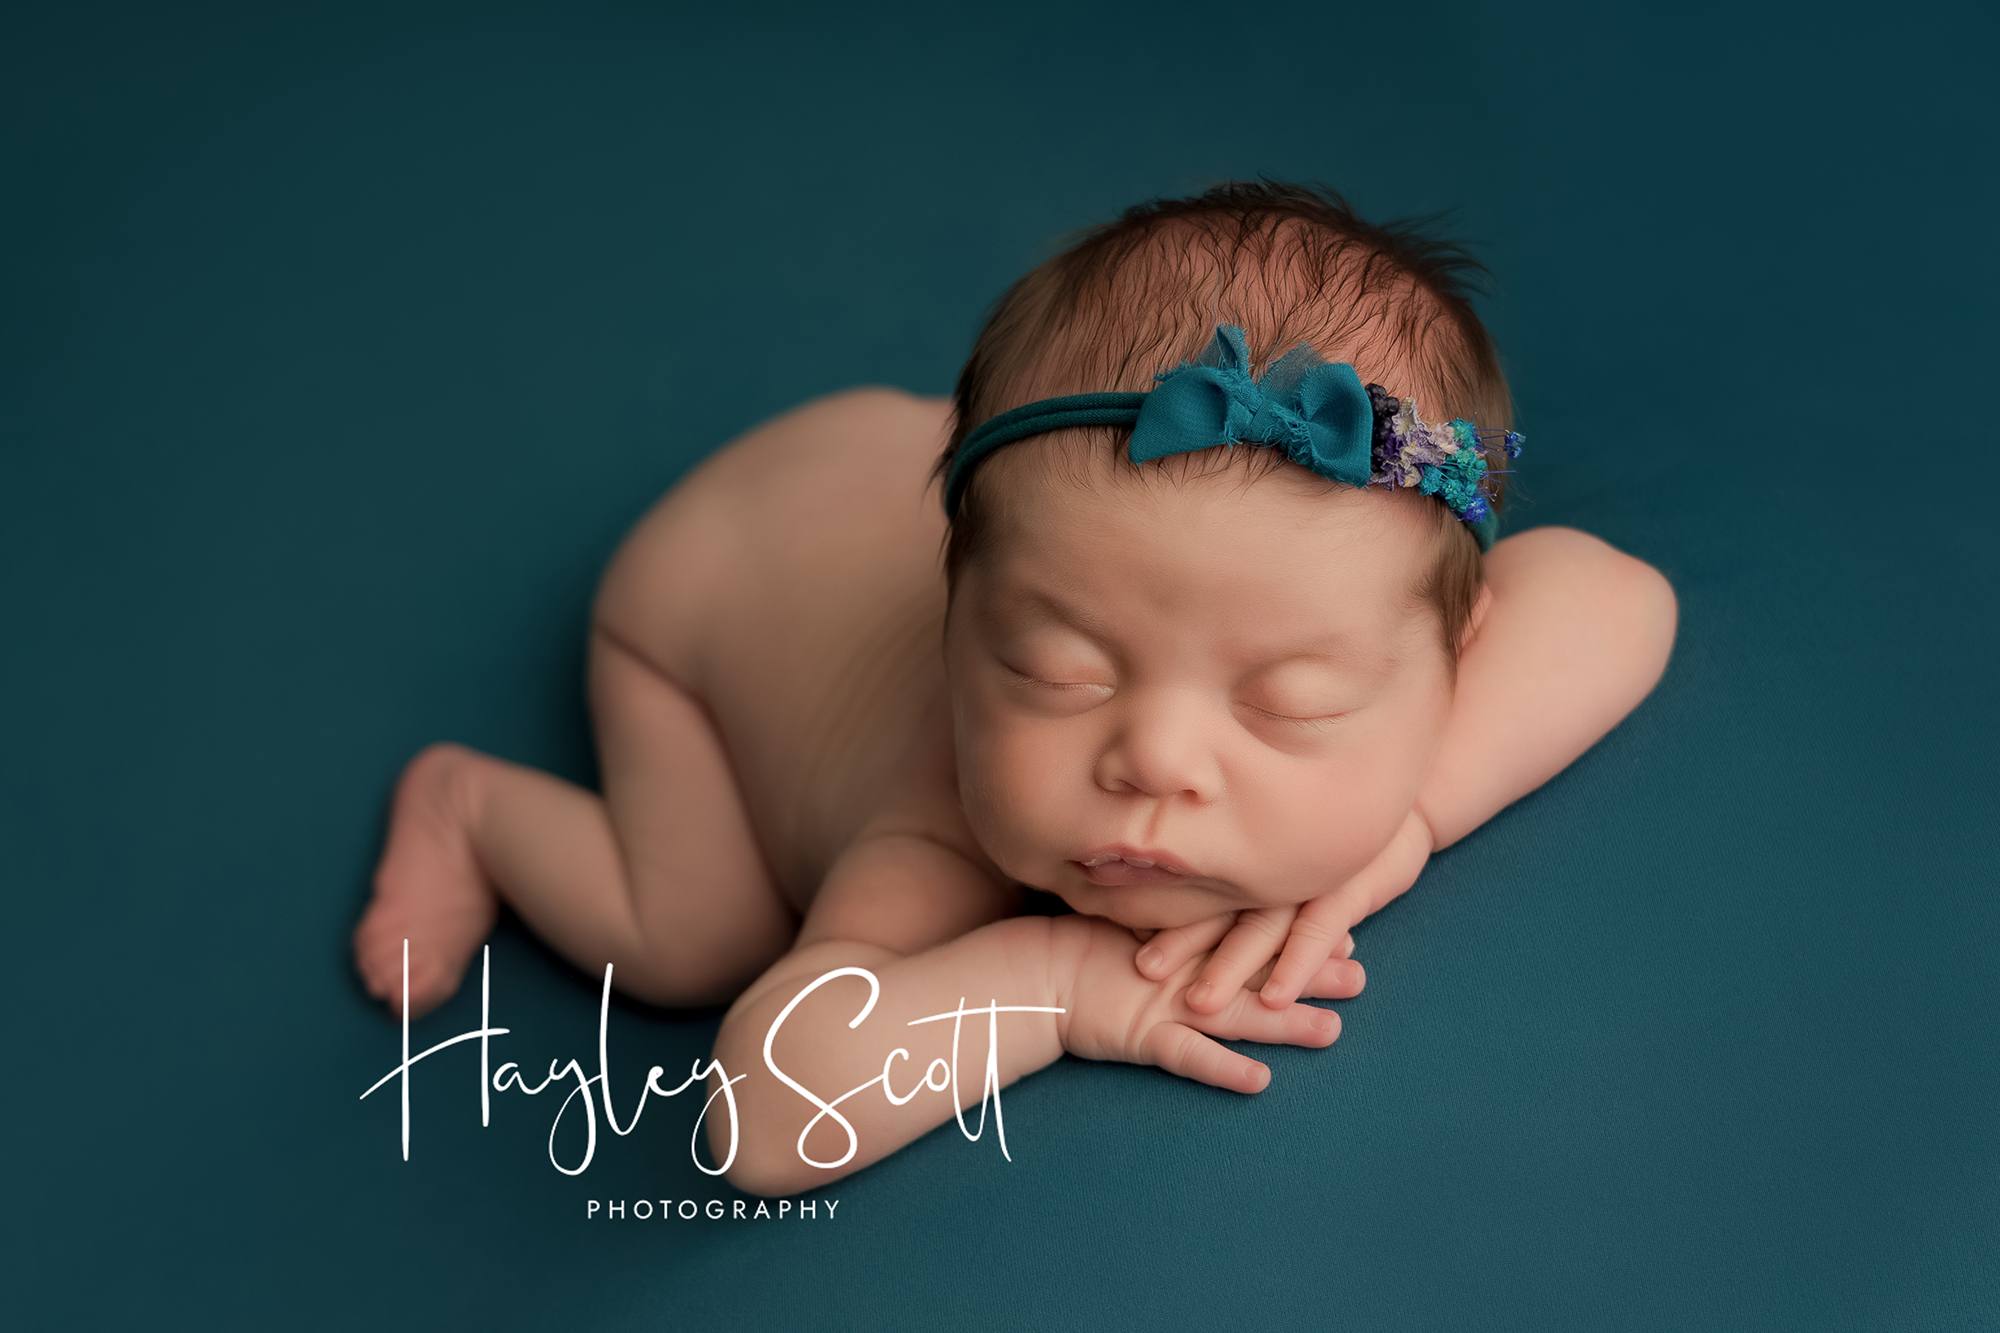 Rustic style Newborn Baby Photography holding teddy bear